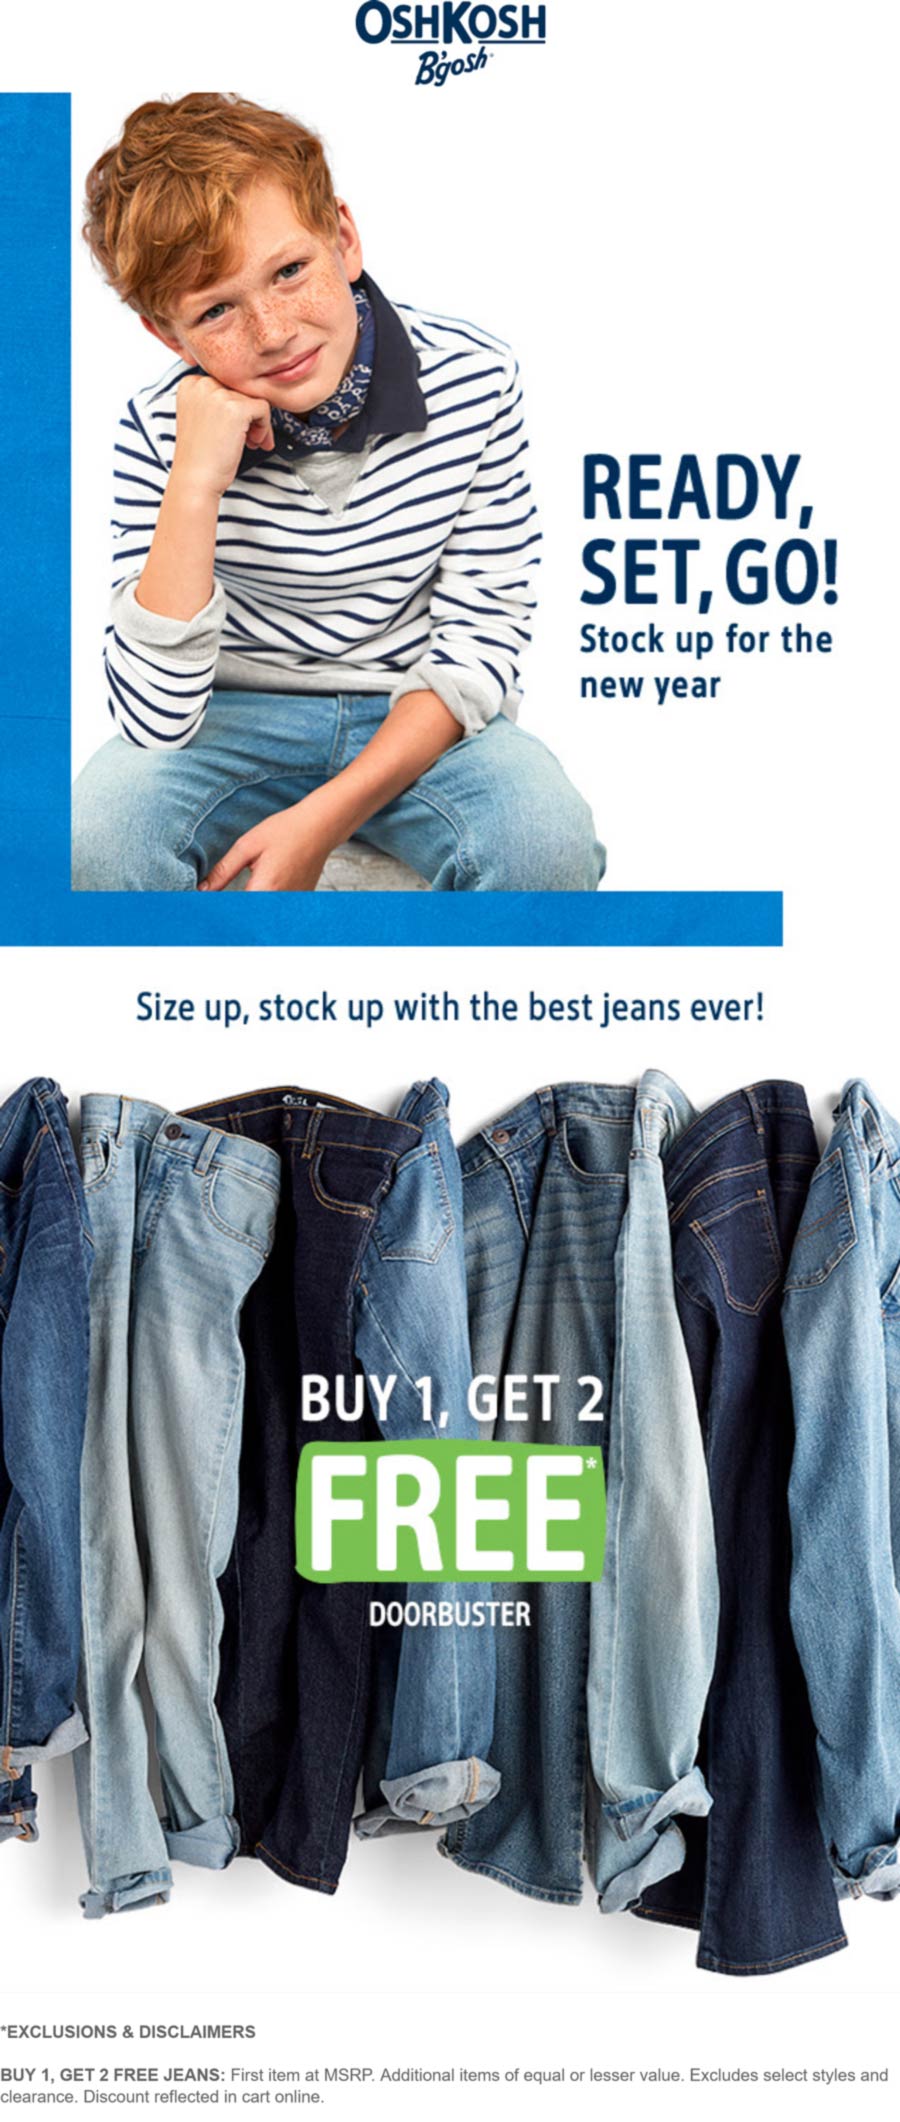 OshKosh Bgosh stores Coupon  3-for-1 on jeans & 20% off sale items at OshKosh Bgosh #oshkoshbgosh 